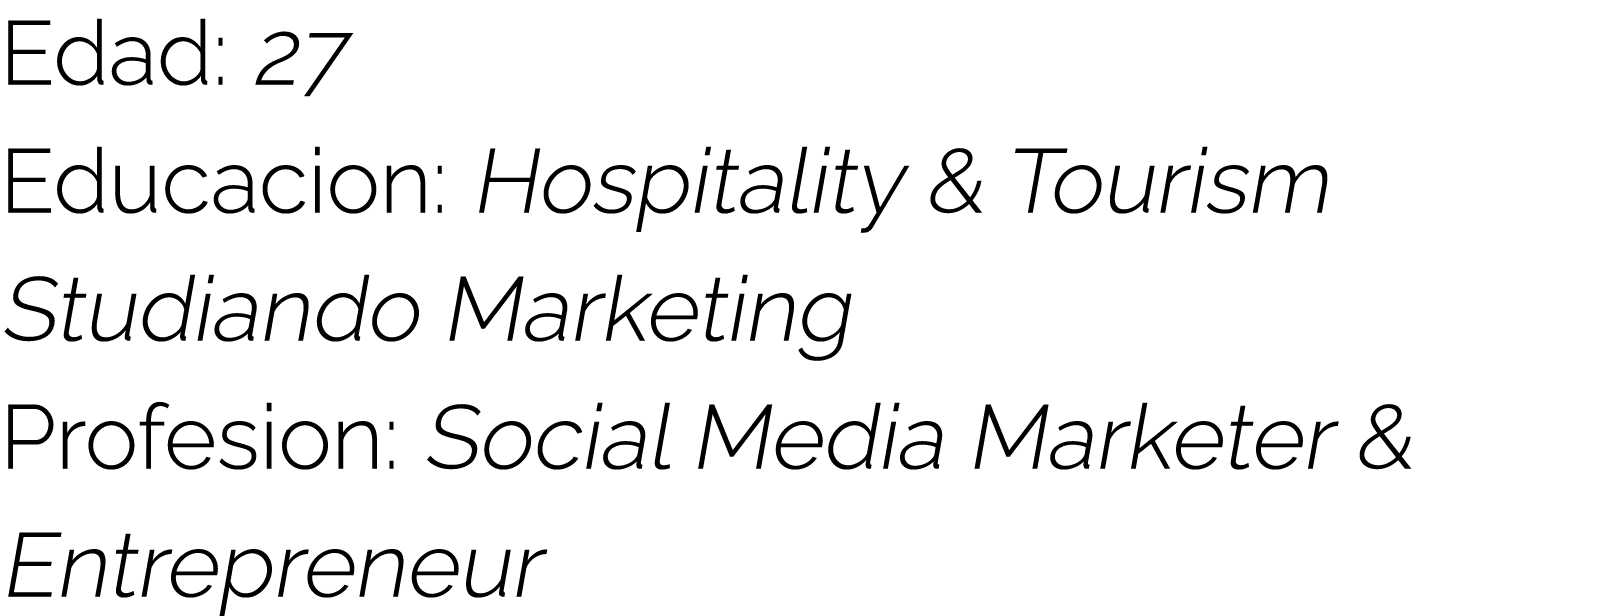 Edad: 27 Educacion: Hospitality & Tourism Studiando Marketing Profesion: Social Media Marketer & Entrepreneur